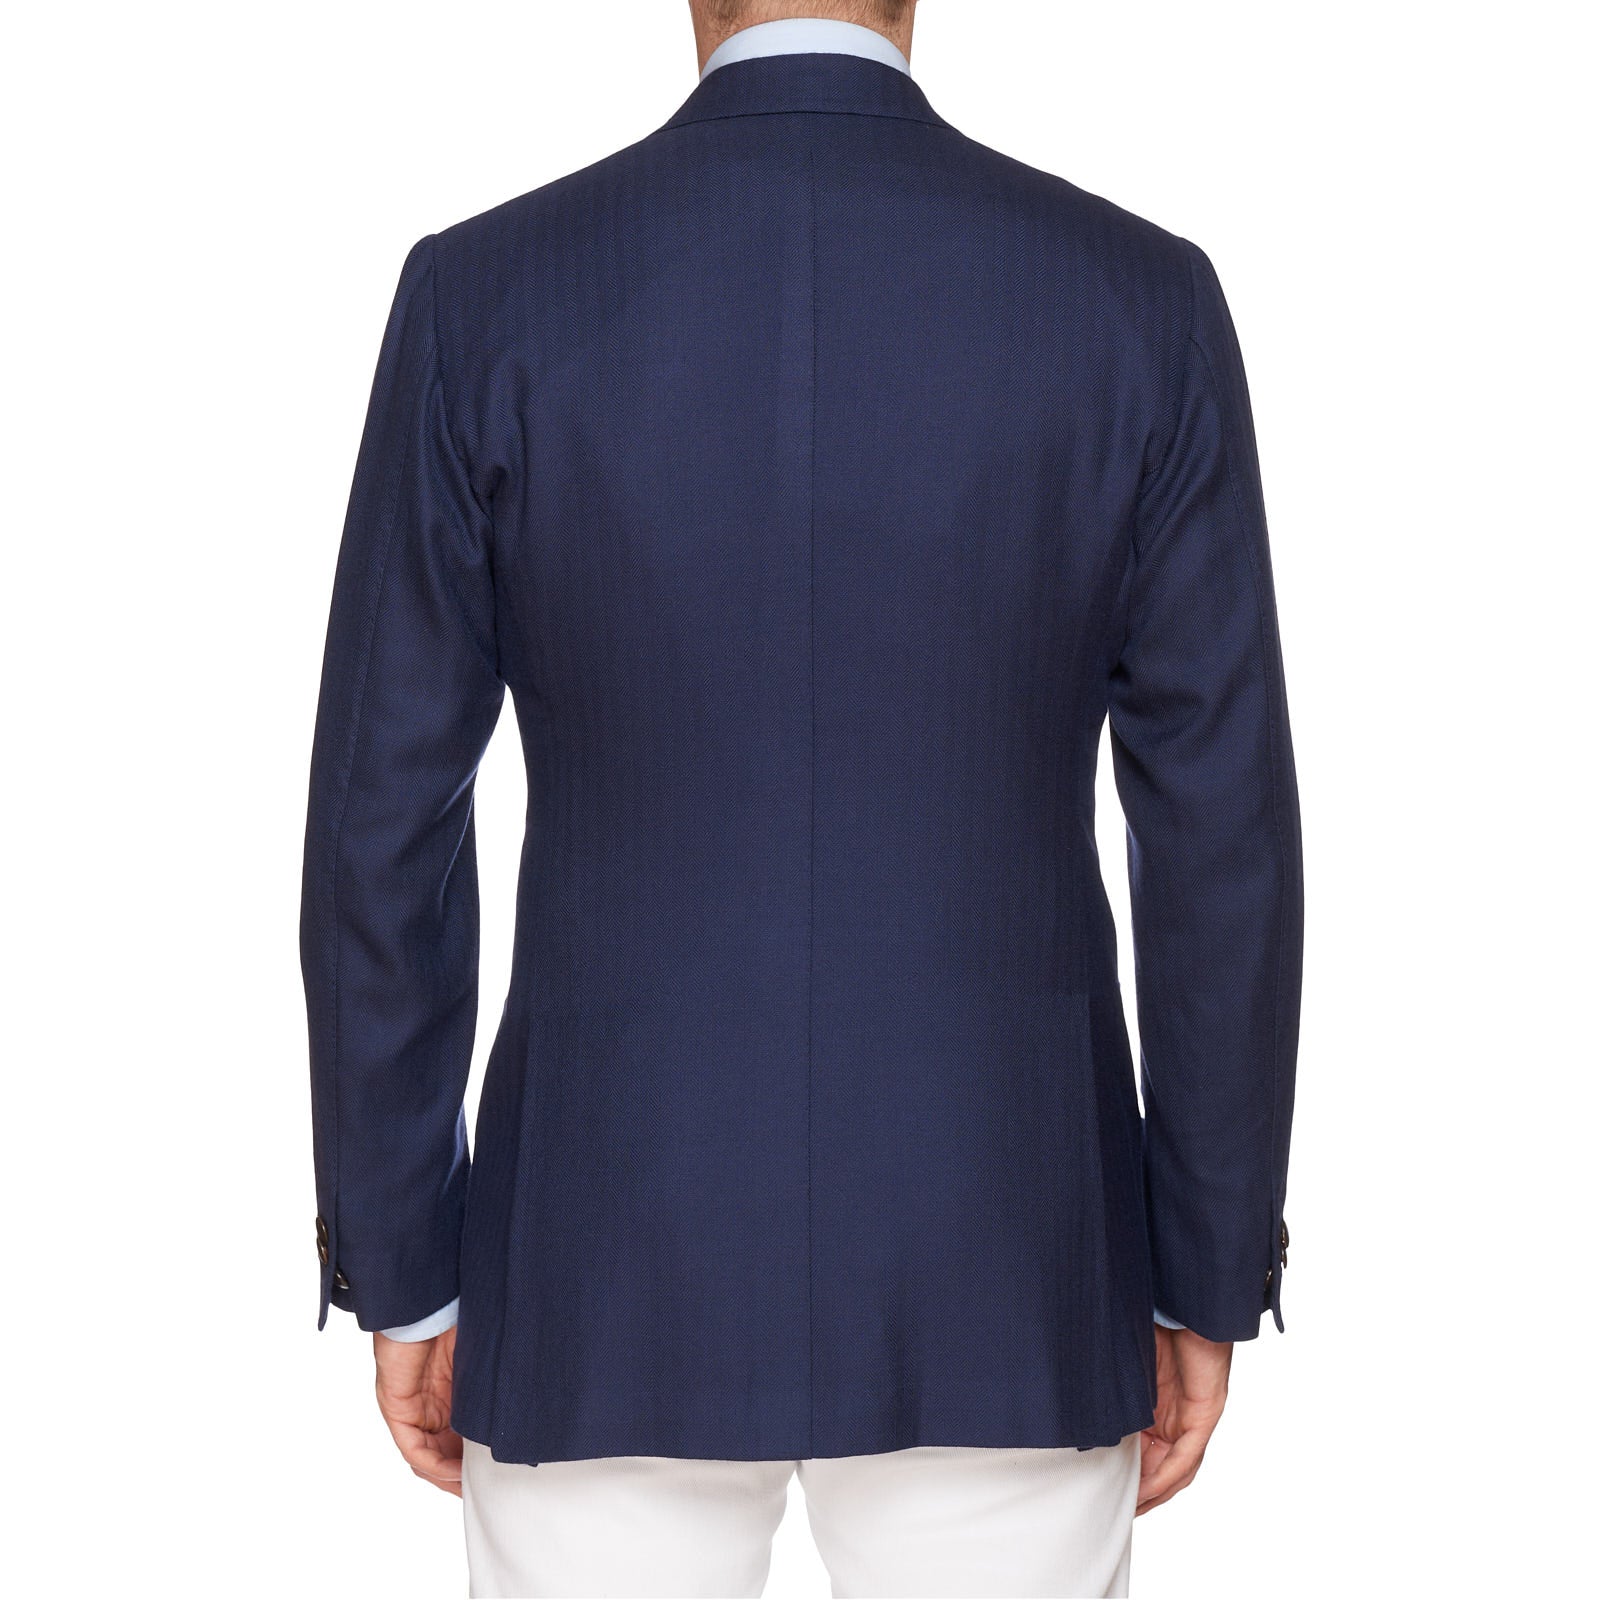 RUBINACCI LH Handmade Bespoke Navy Blue Herringbone Cashmere Jacket EU 50 NEW US 40 RUBINACCI